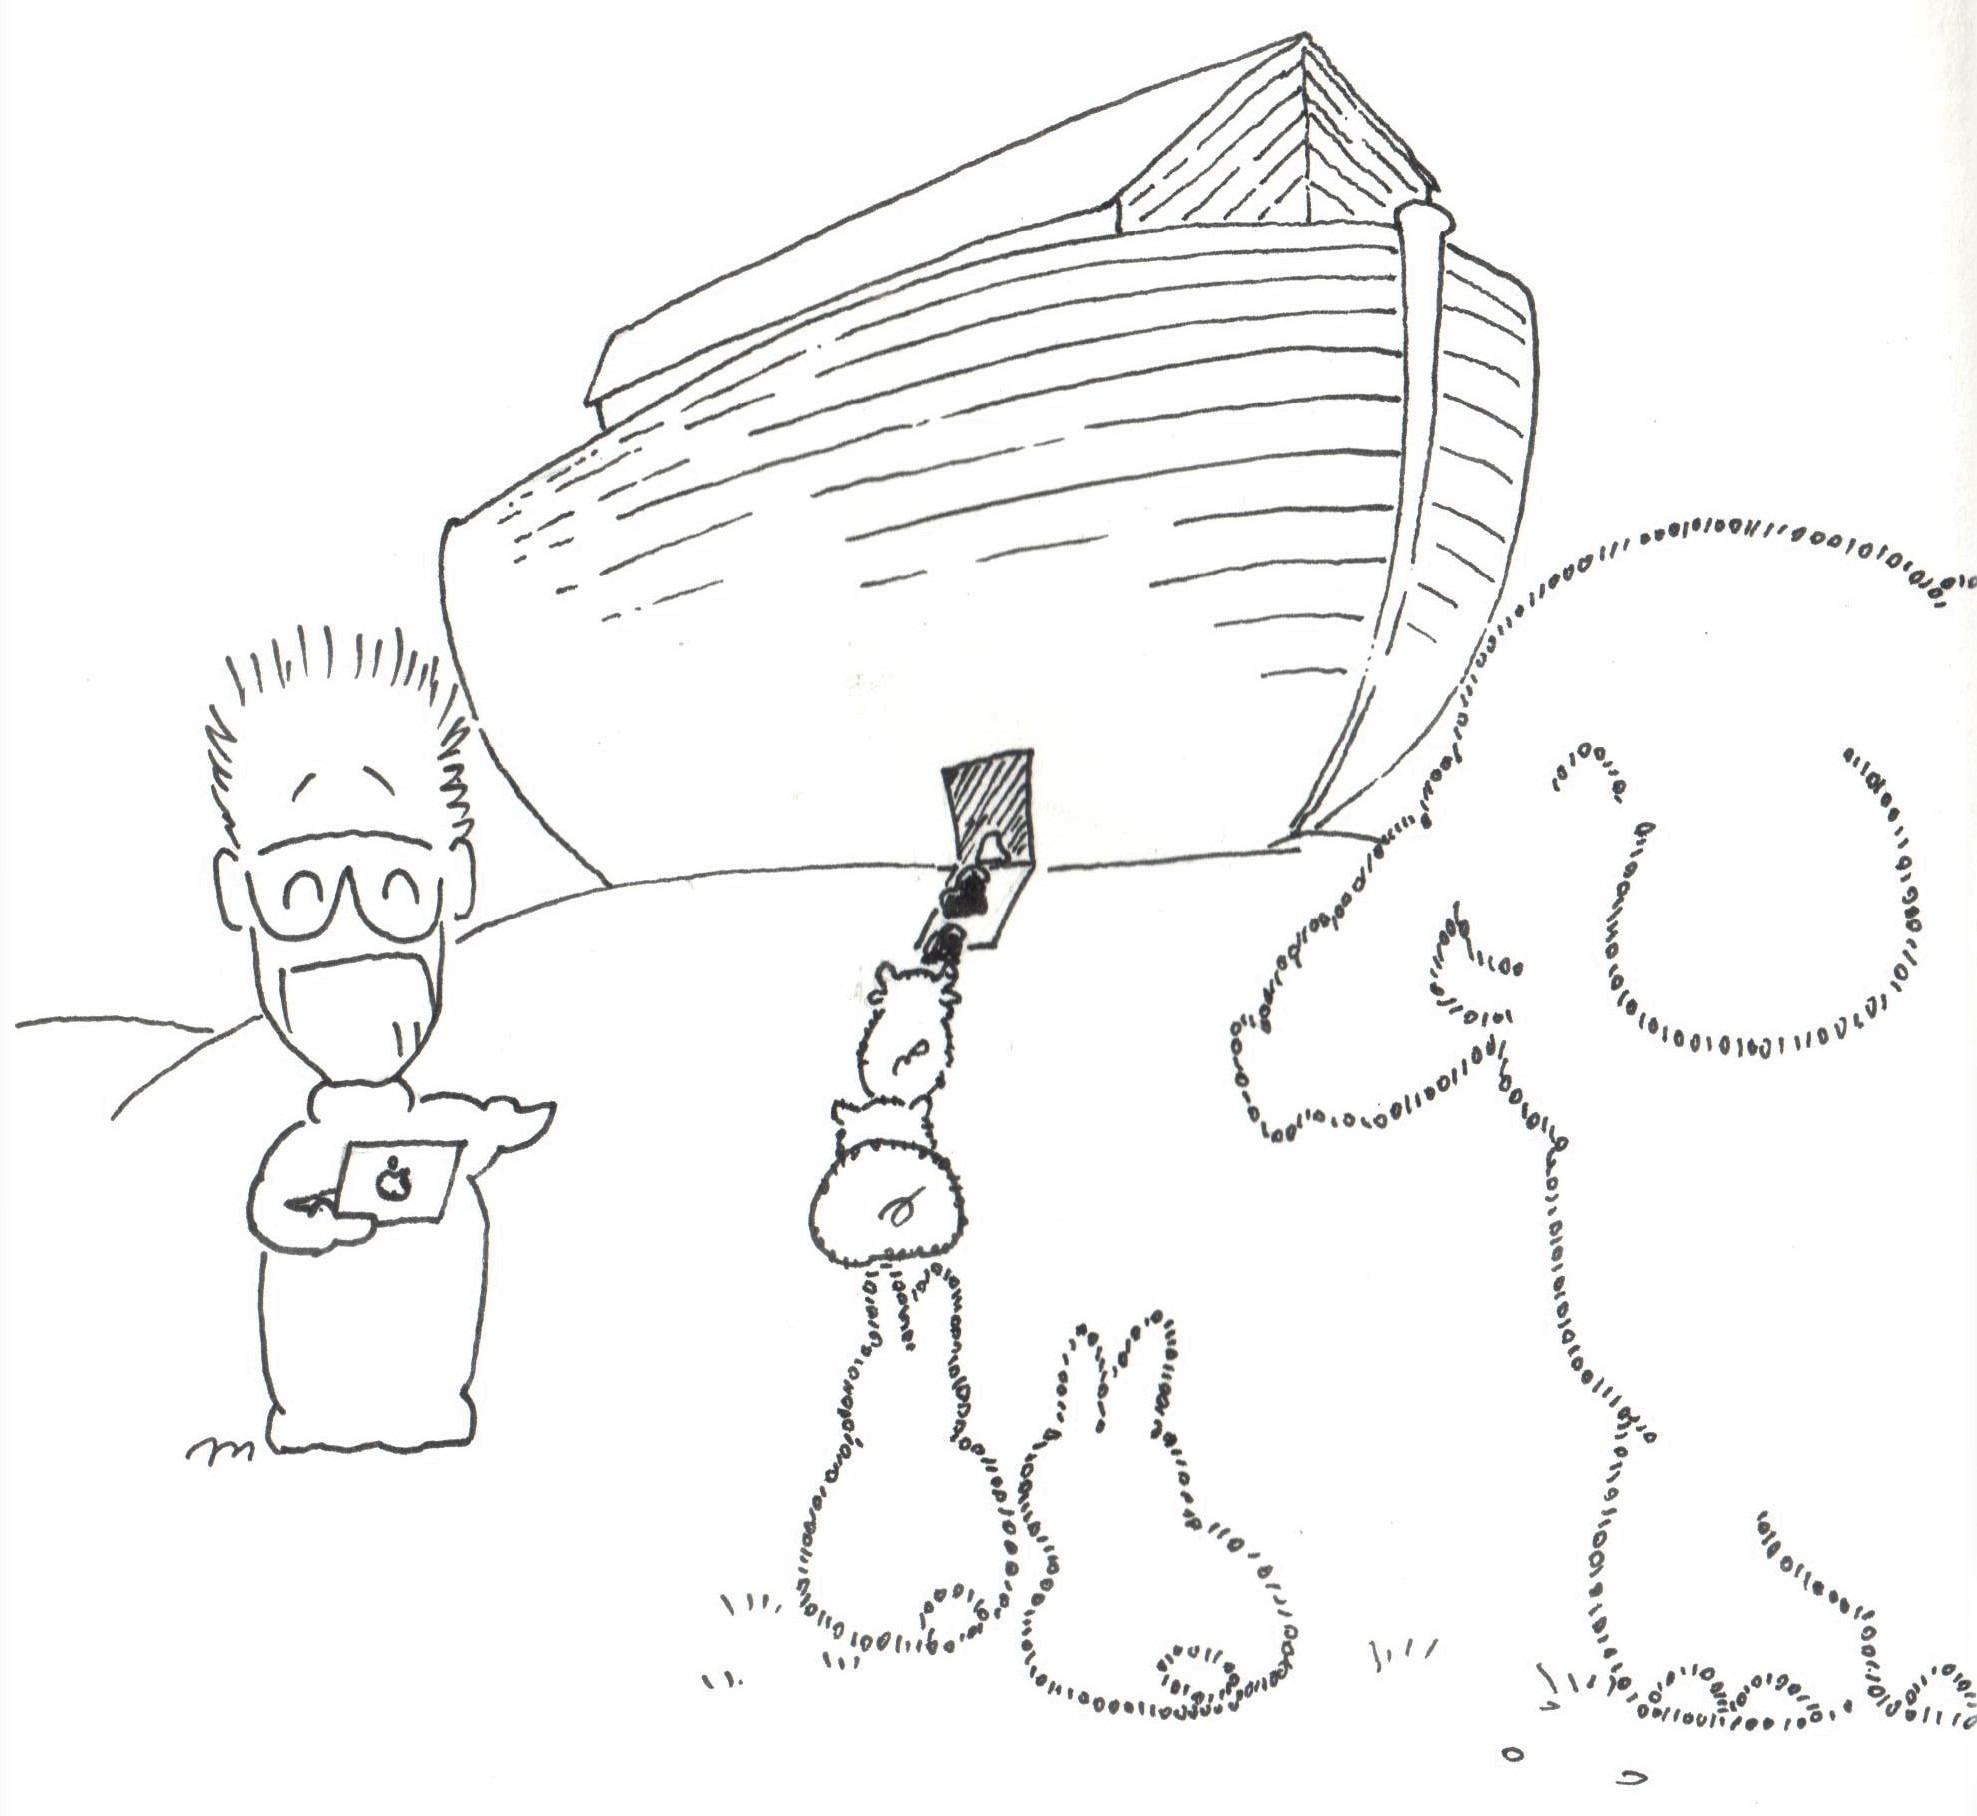 Vaseman guiding digital animals to enter an ark